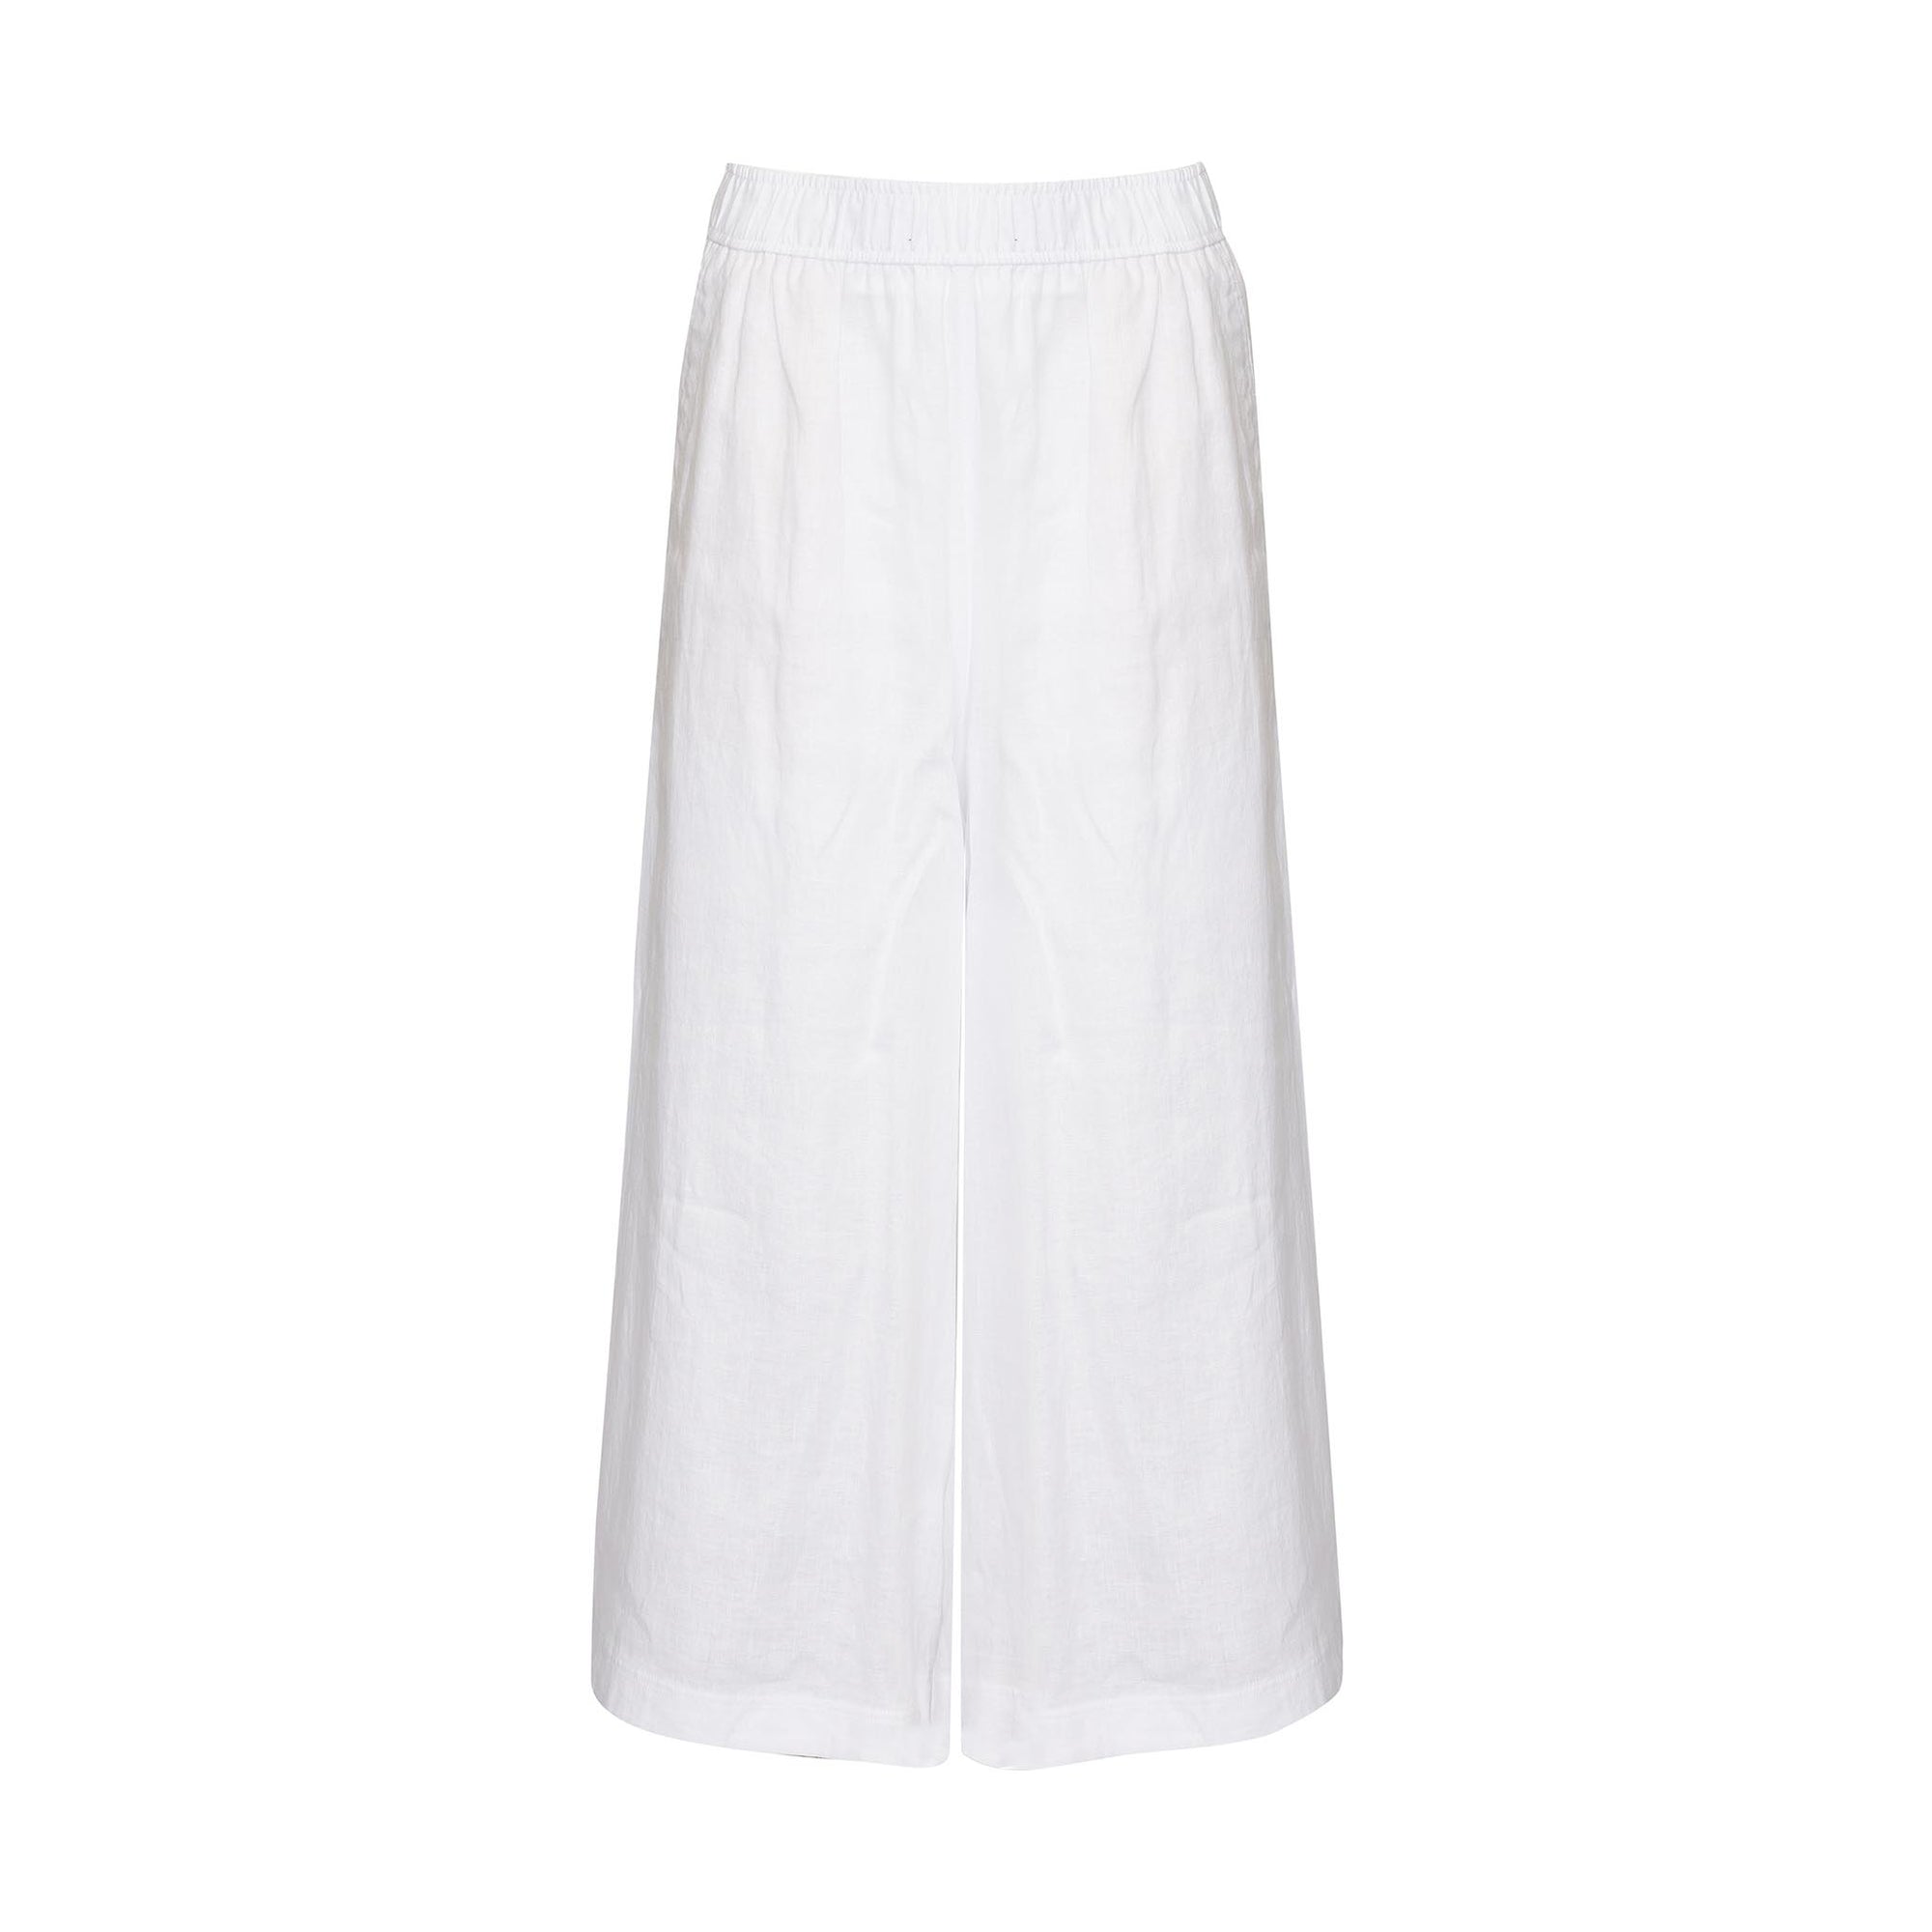 white, pants, elasticated waist, side pockets, wide leg, product image